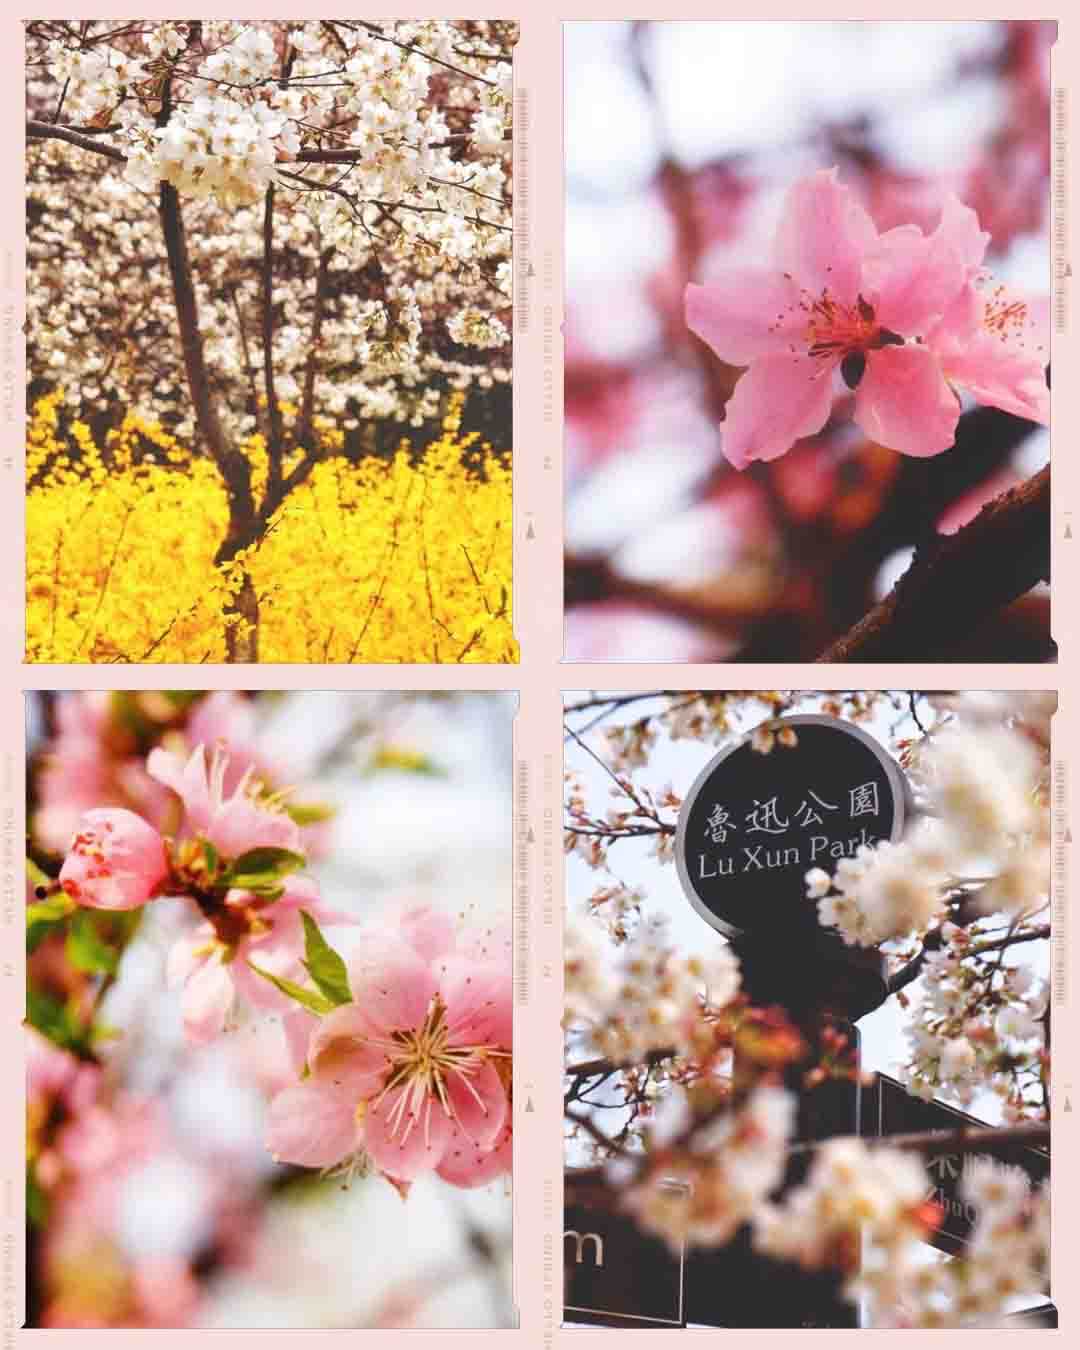 Where to Enjoy Cherry Blossom in Shanghai | Luxun Park